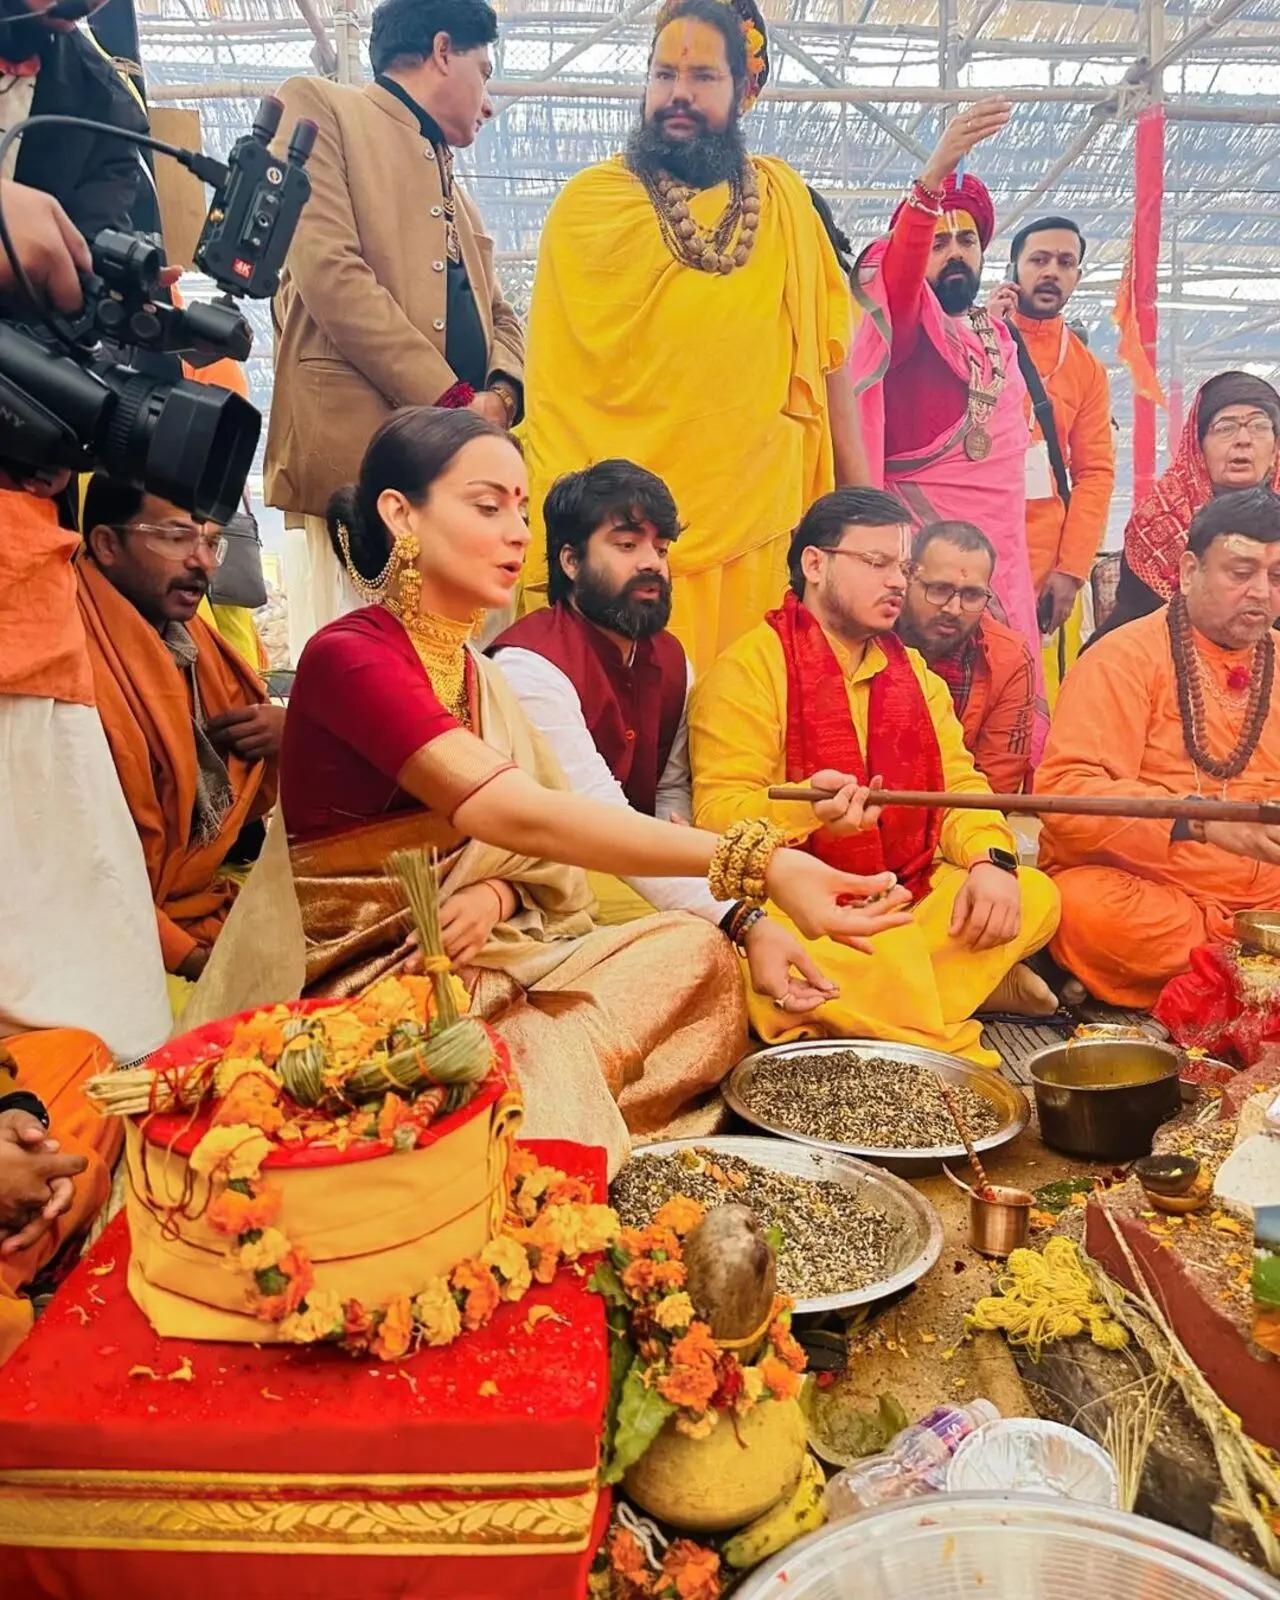 On Sunday, actress Kangana Ranaut was seen performing yagya, meeting spiritual gurus and visiting temples in Ayodhya. She was accompanied by her sister Rangoli